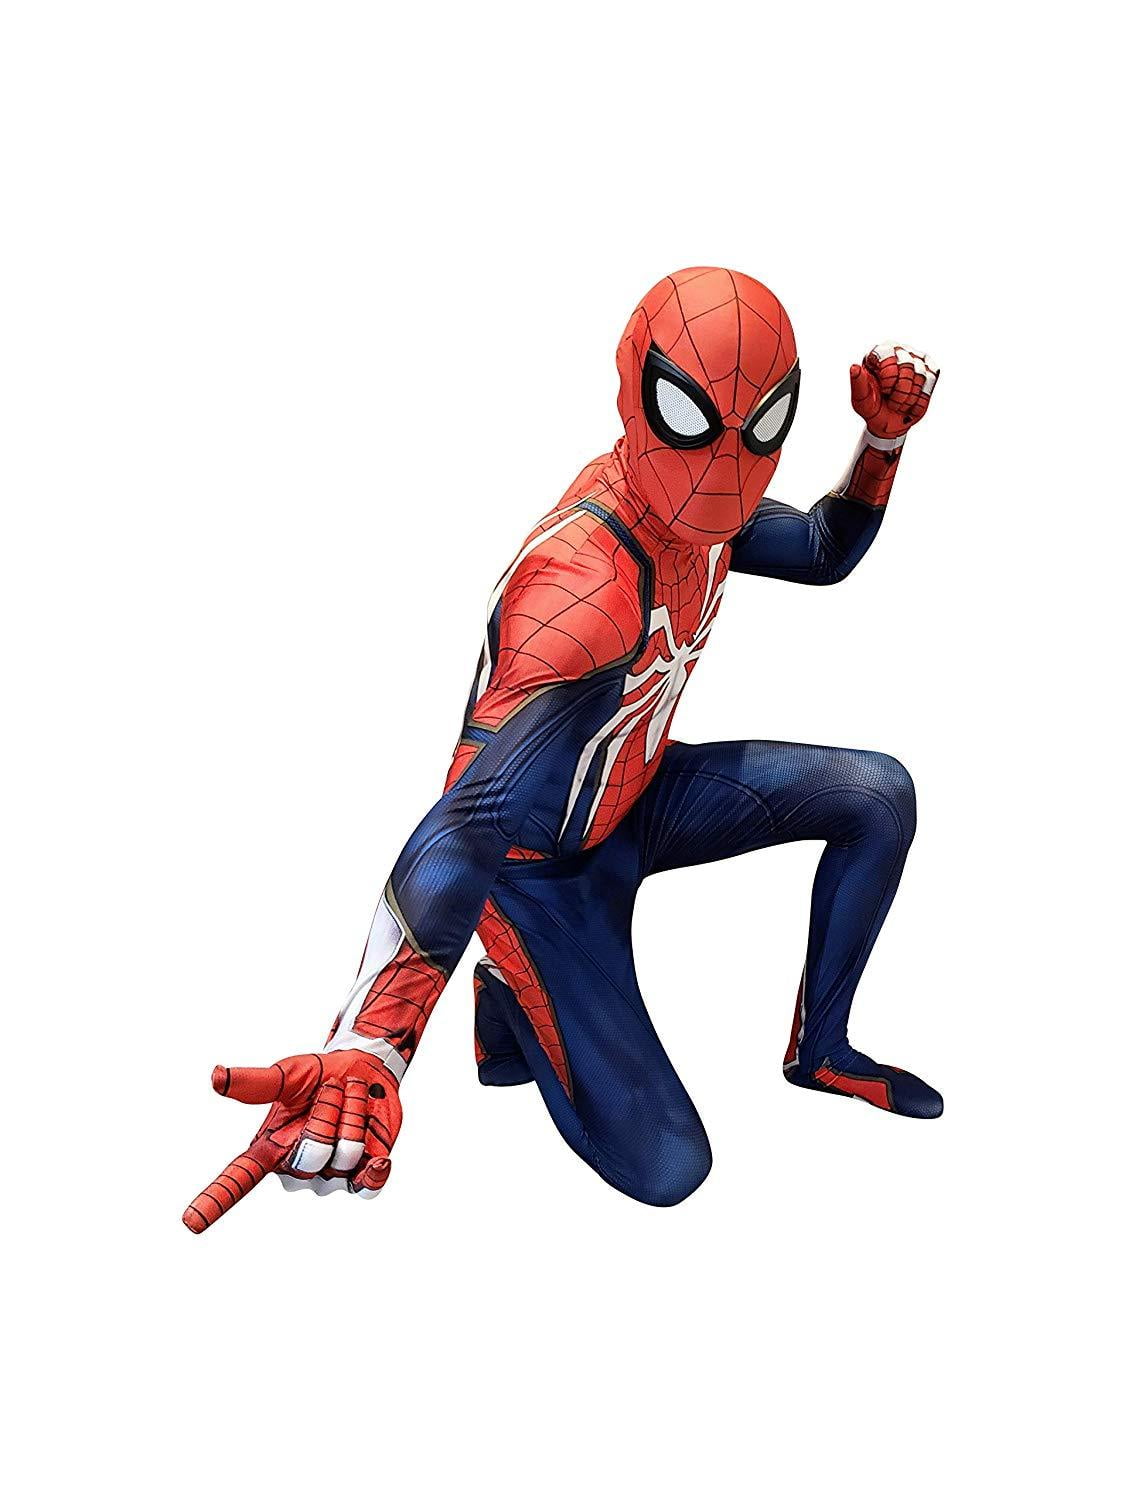 2018 Avengers Infinity War Spider-Man Costume Bodysuit Fullset with Mask Cosplay 